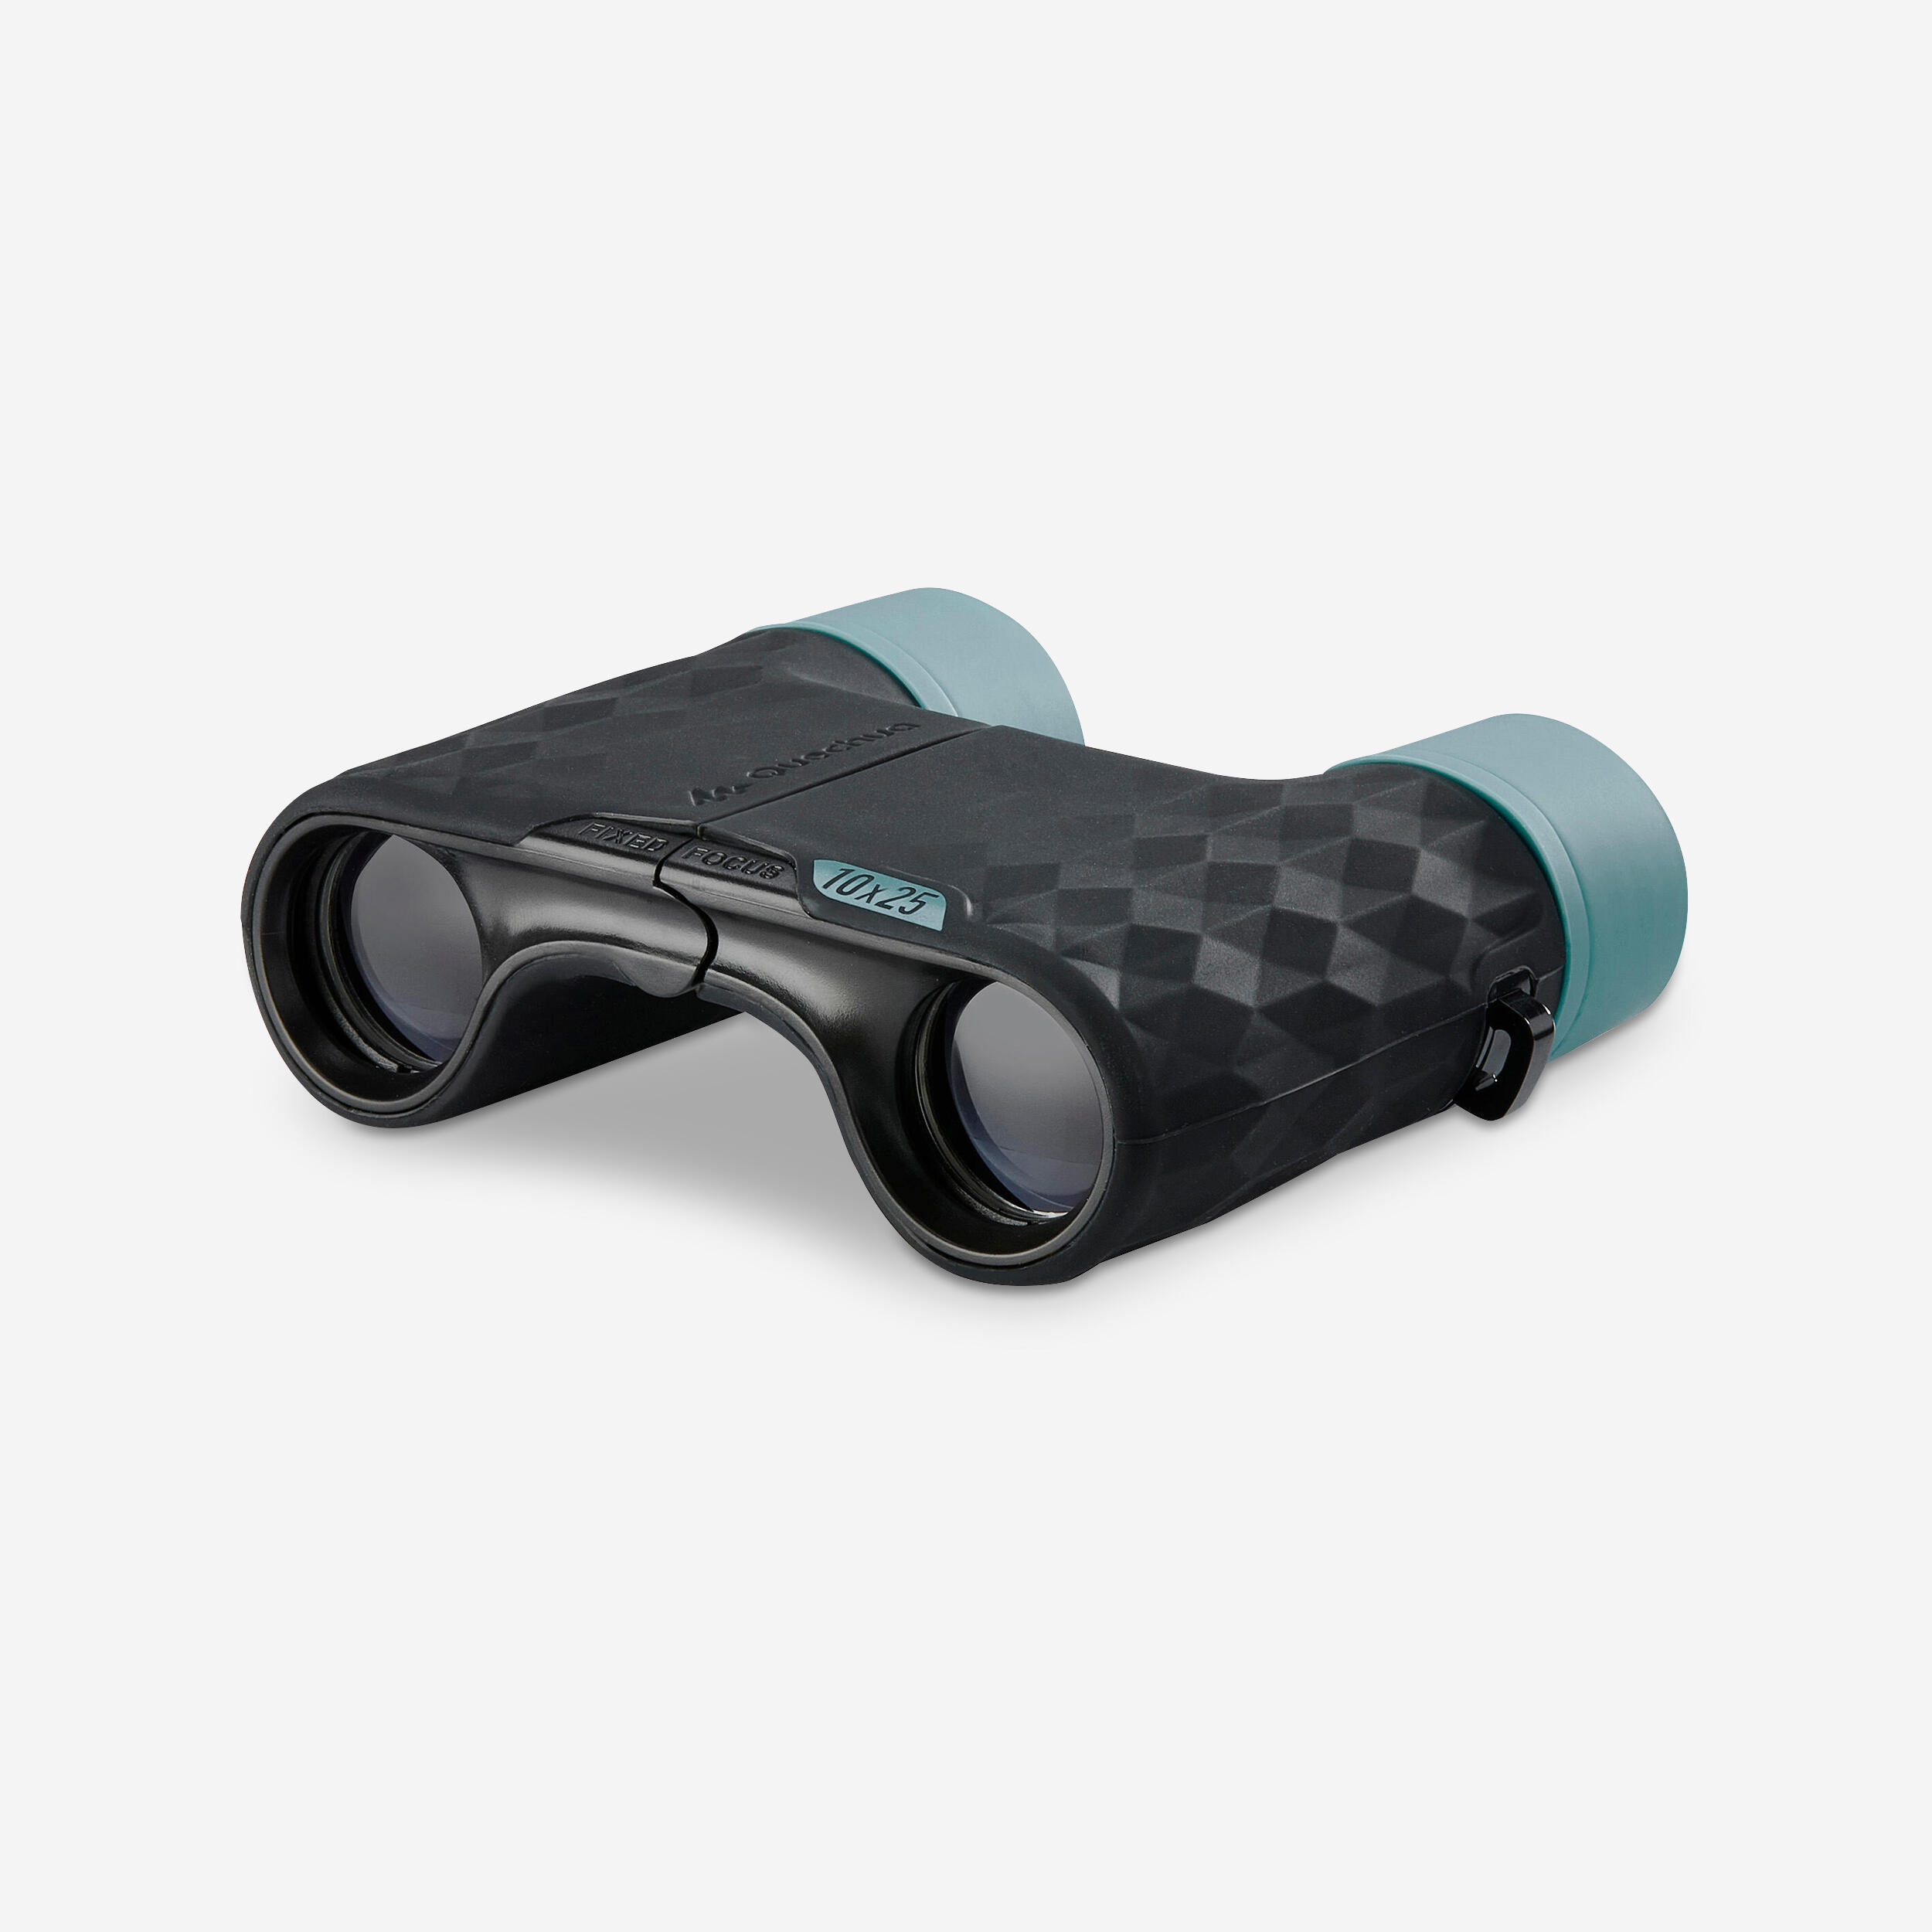 QUECHUA Adult's Hiking Focus-Free Binoculars MH B140 x10 Magnification - blue grey